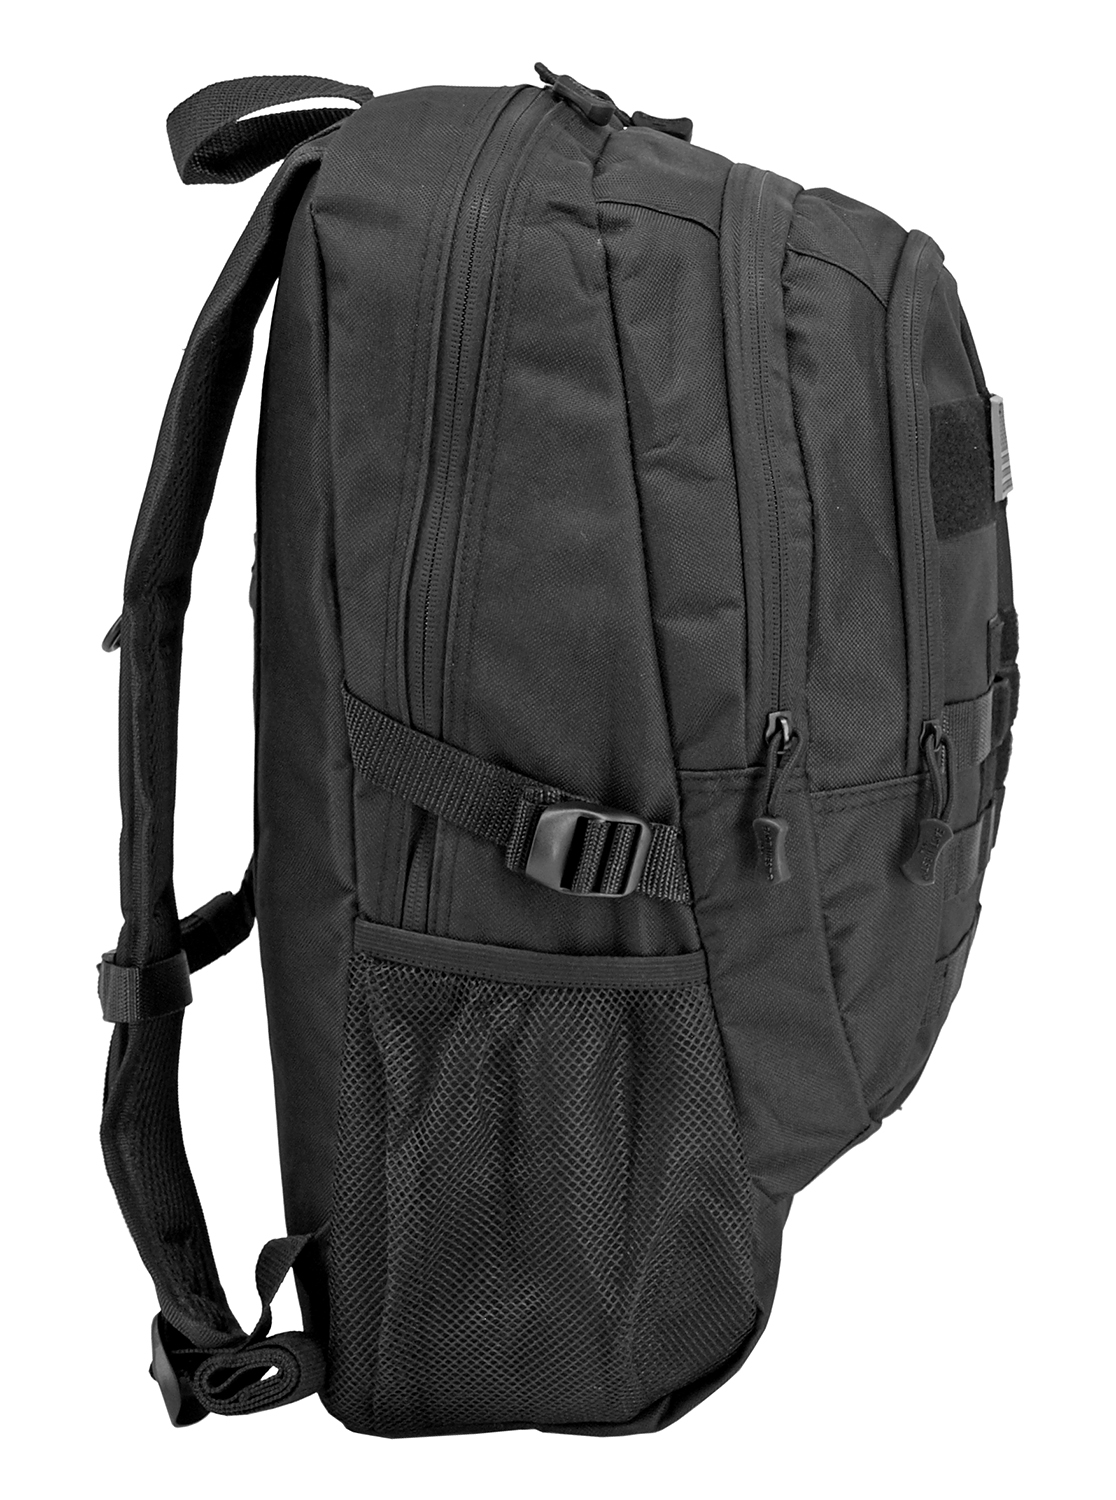 Tactical All-Terrain Backpack - Black